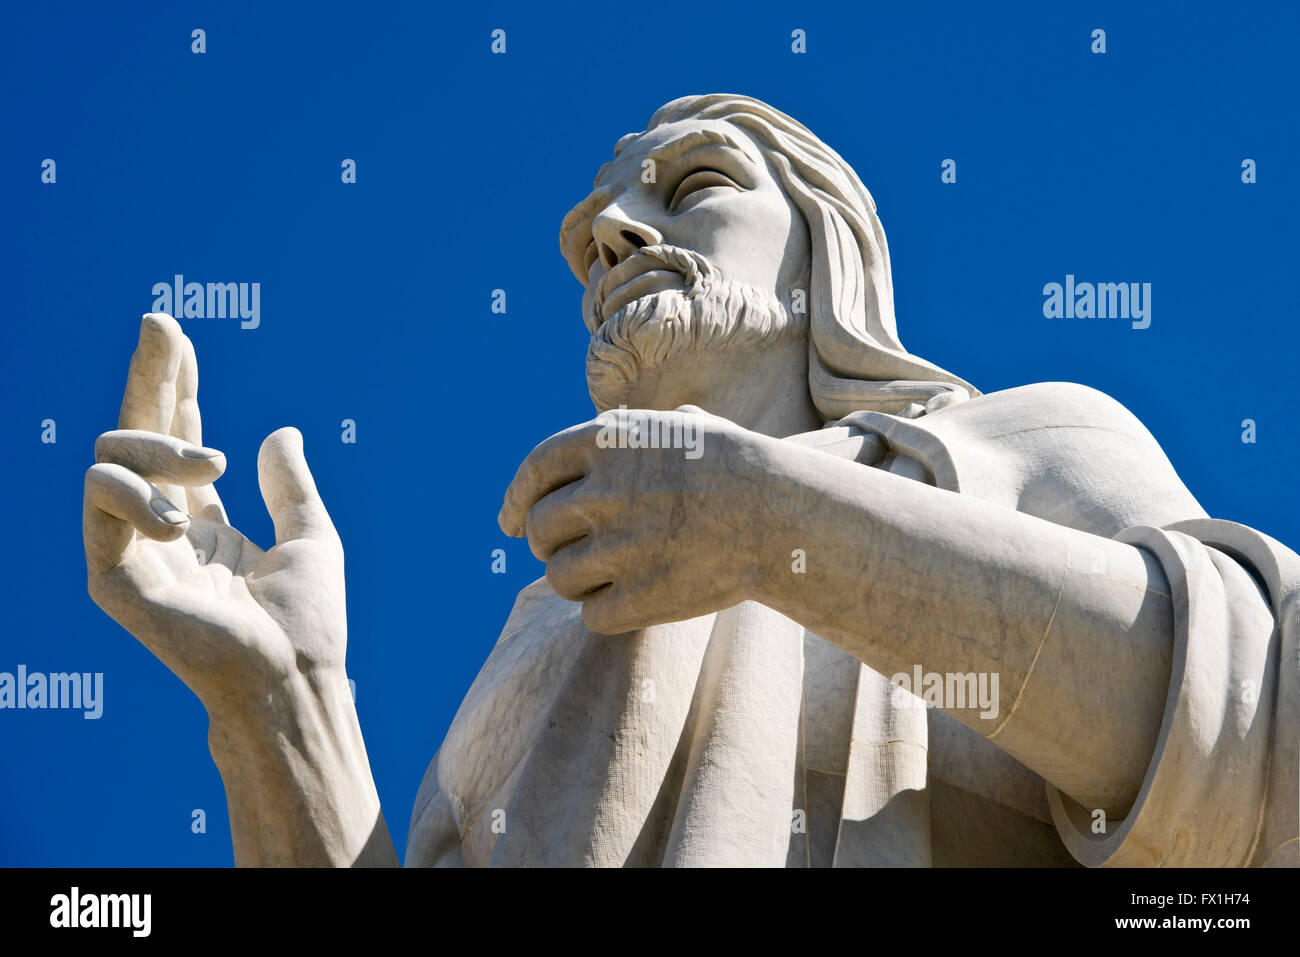 Horizontal close up view of the Christ of Havana statue, Cuba. Stock Photo